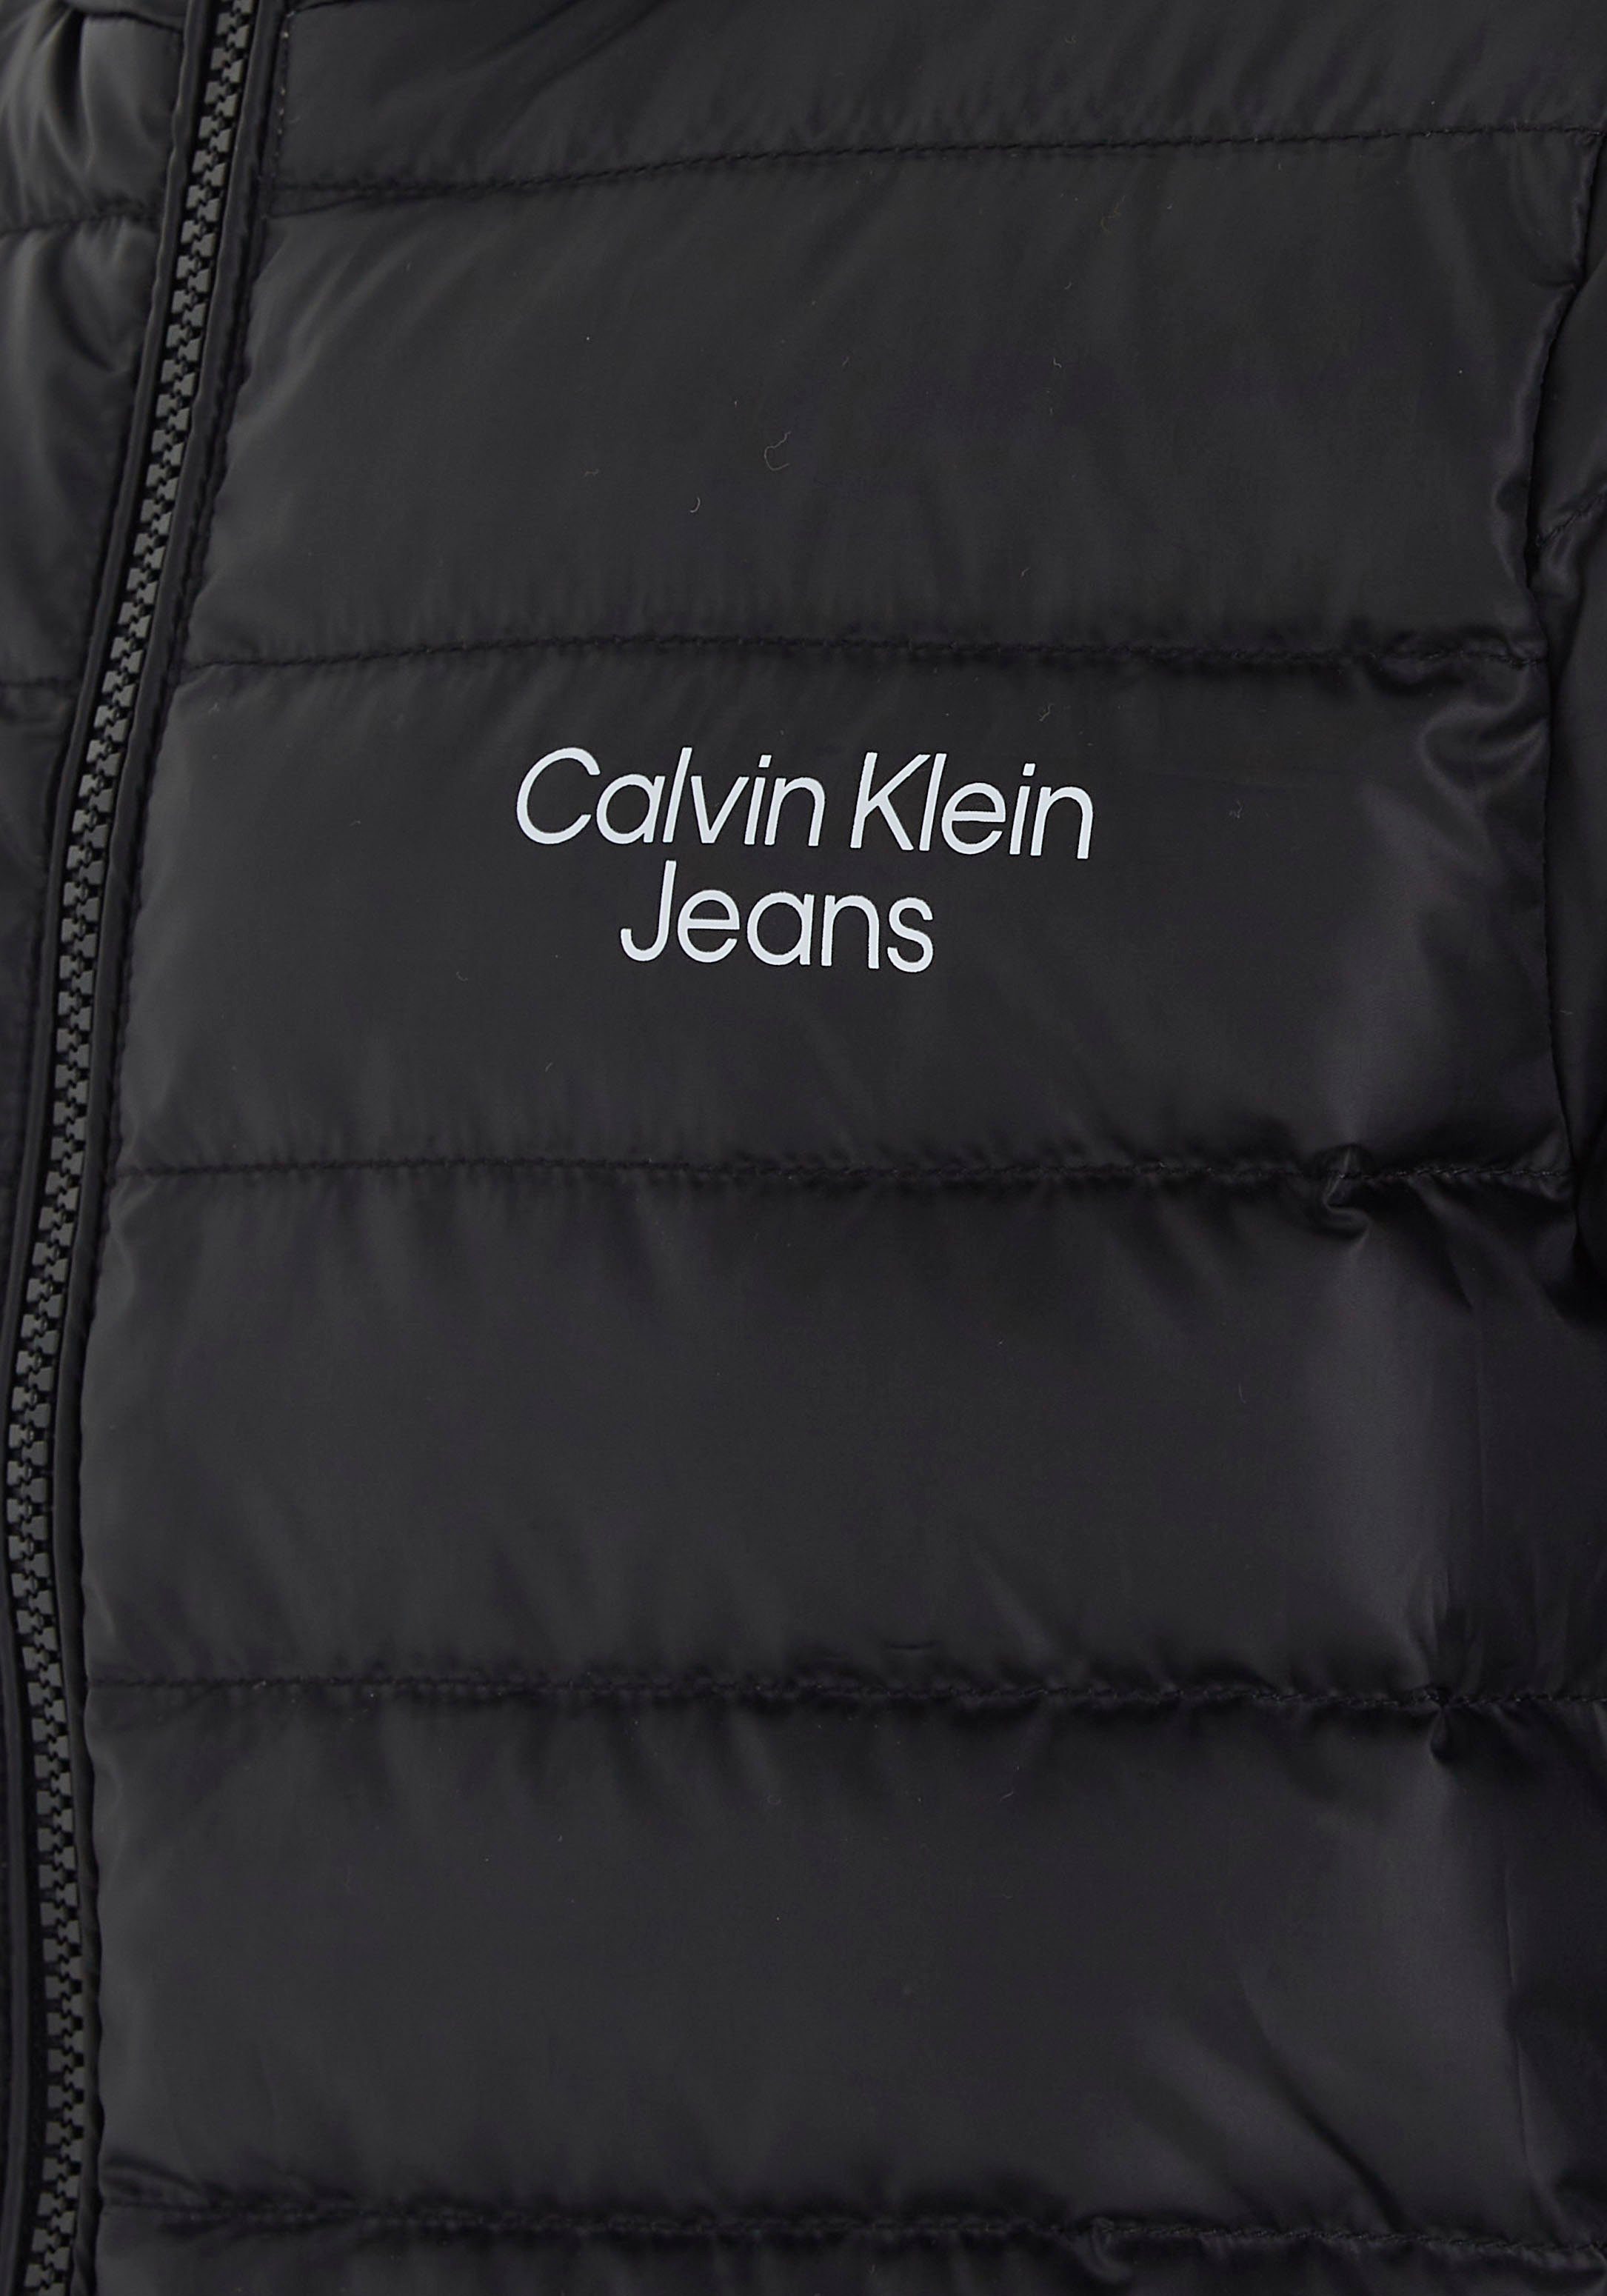 LOGO LW Calvin DOWN JACKET Jeans Steppjacke Klein